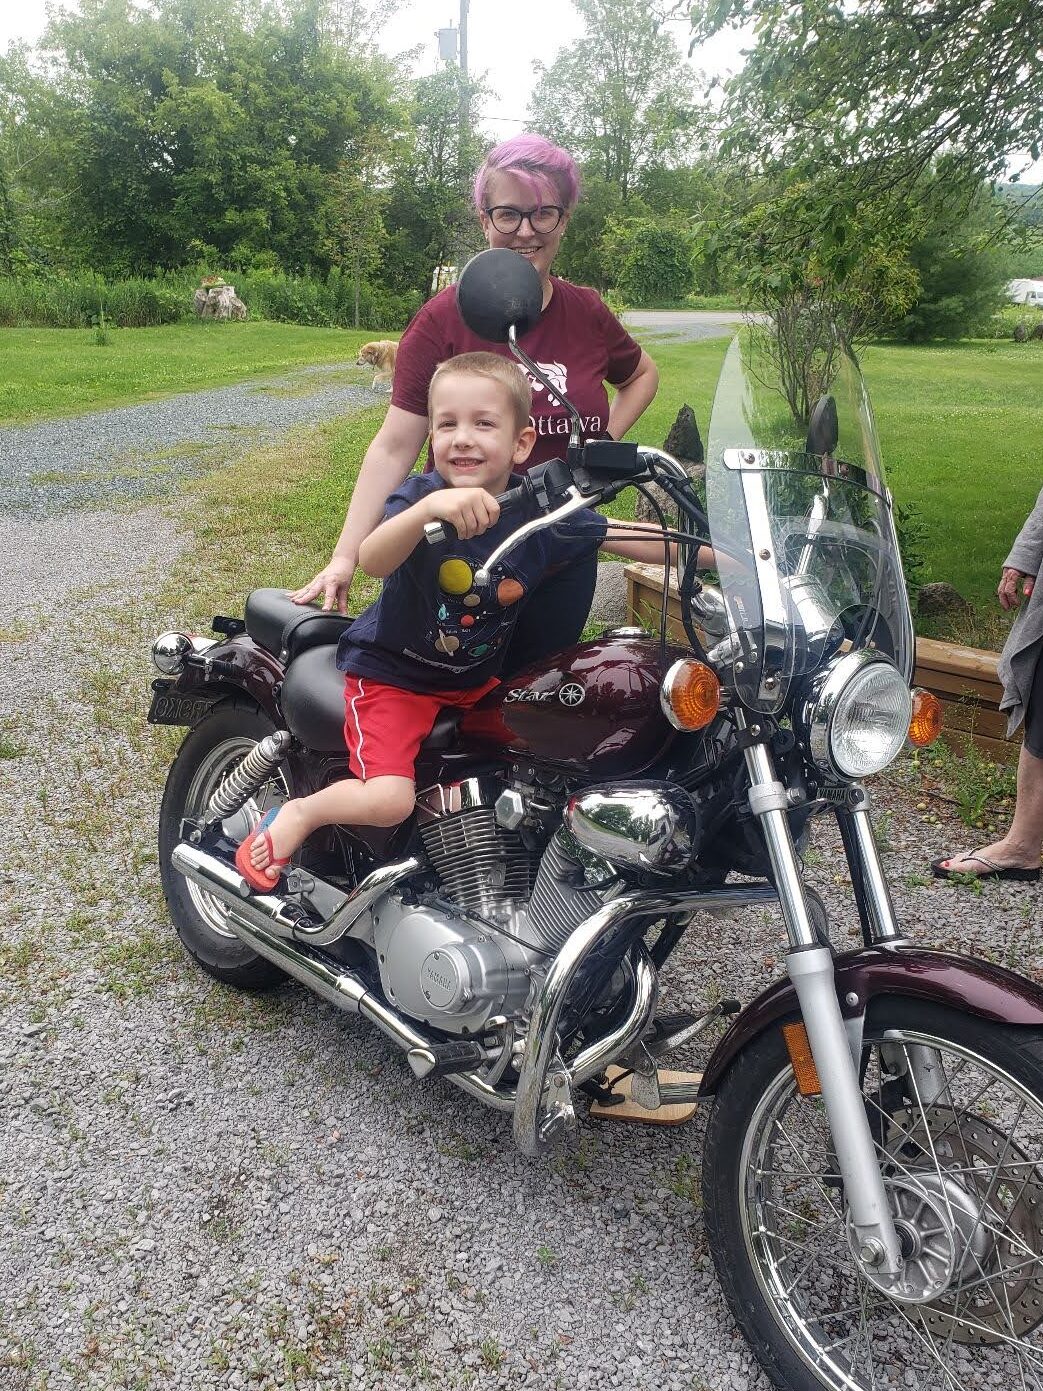 Heather Woods teaching her nephew how to “ride” her bike